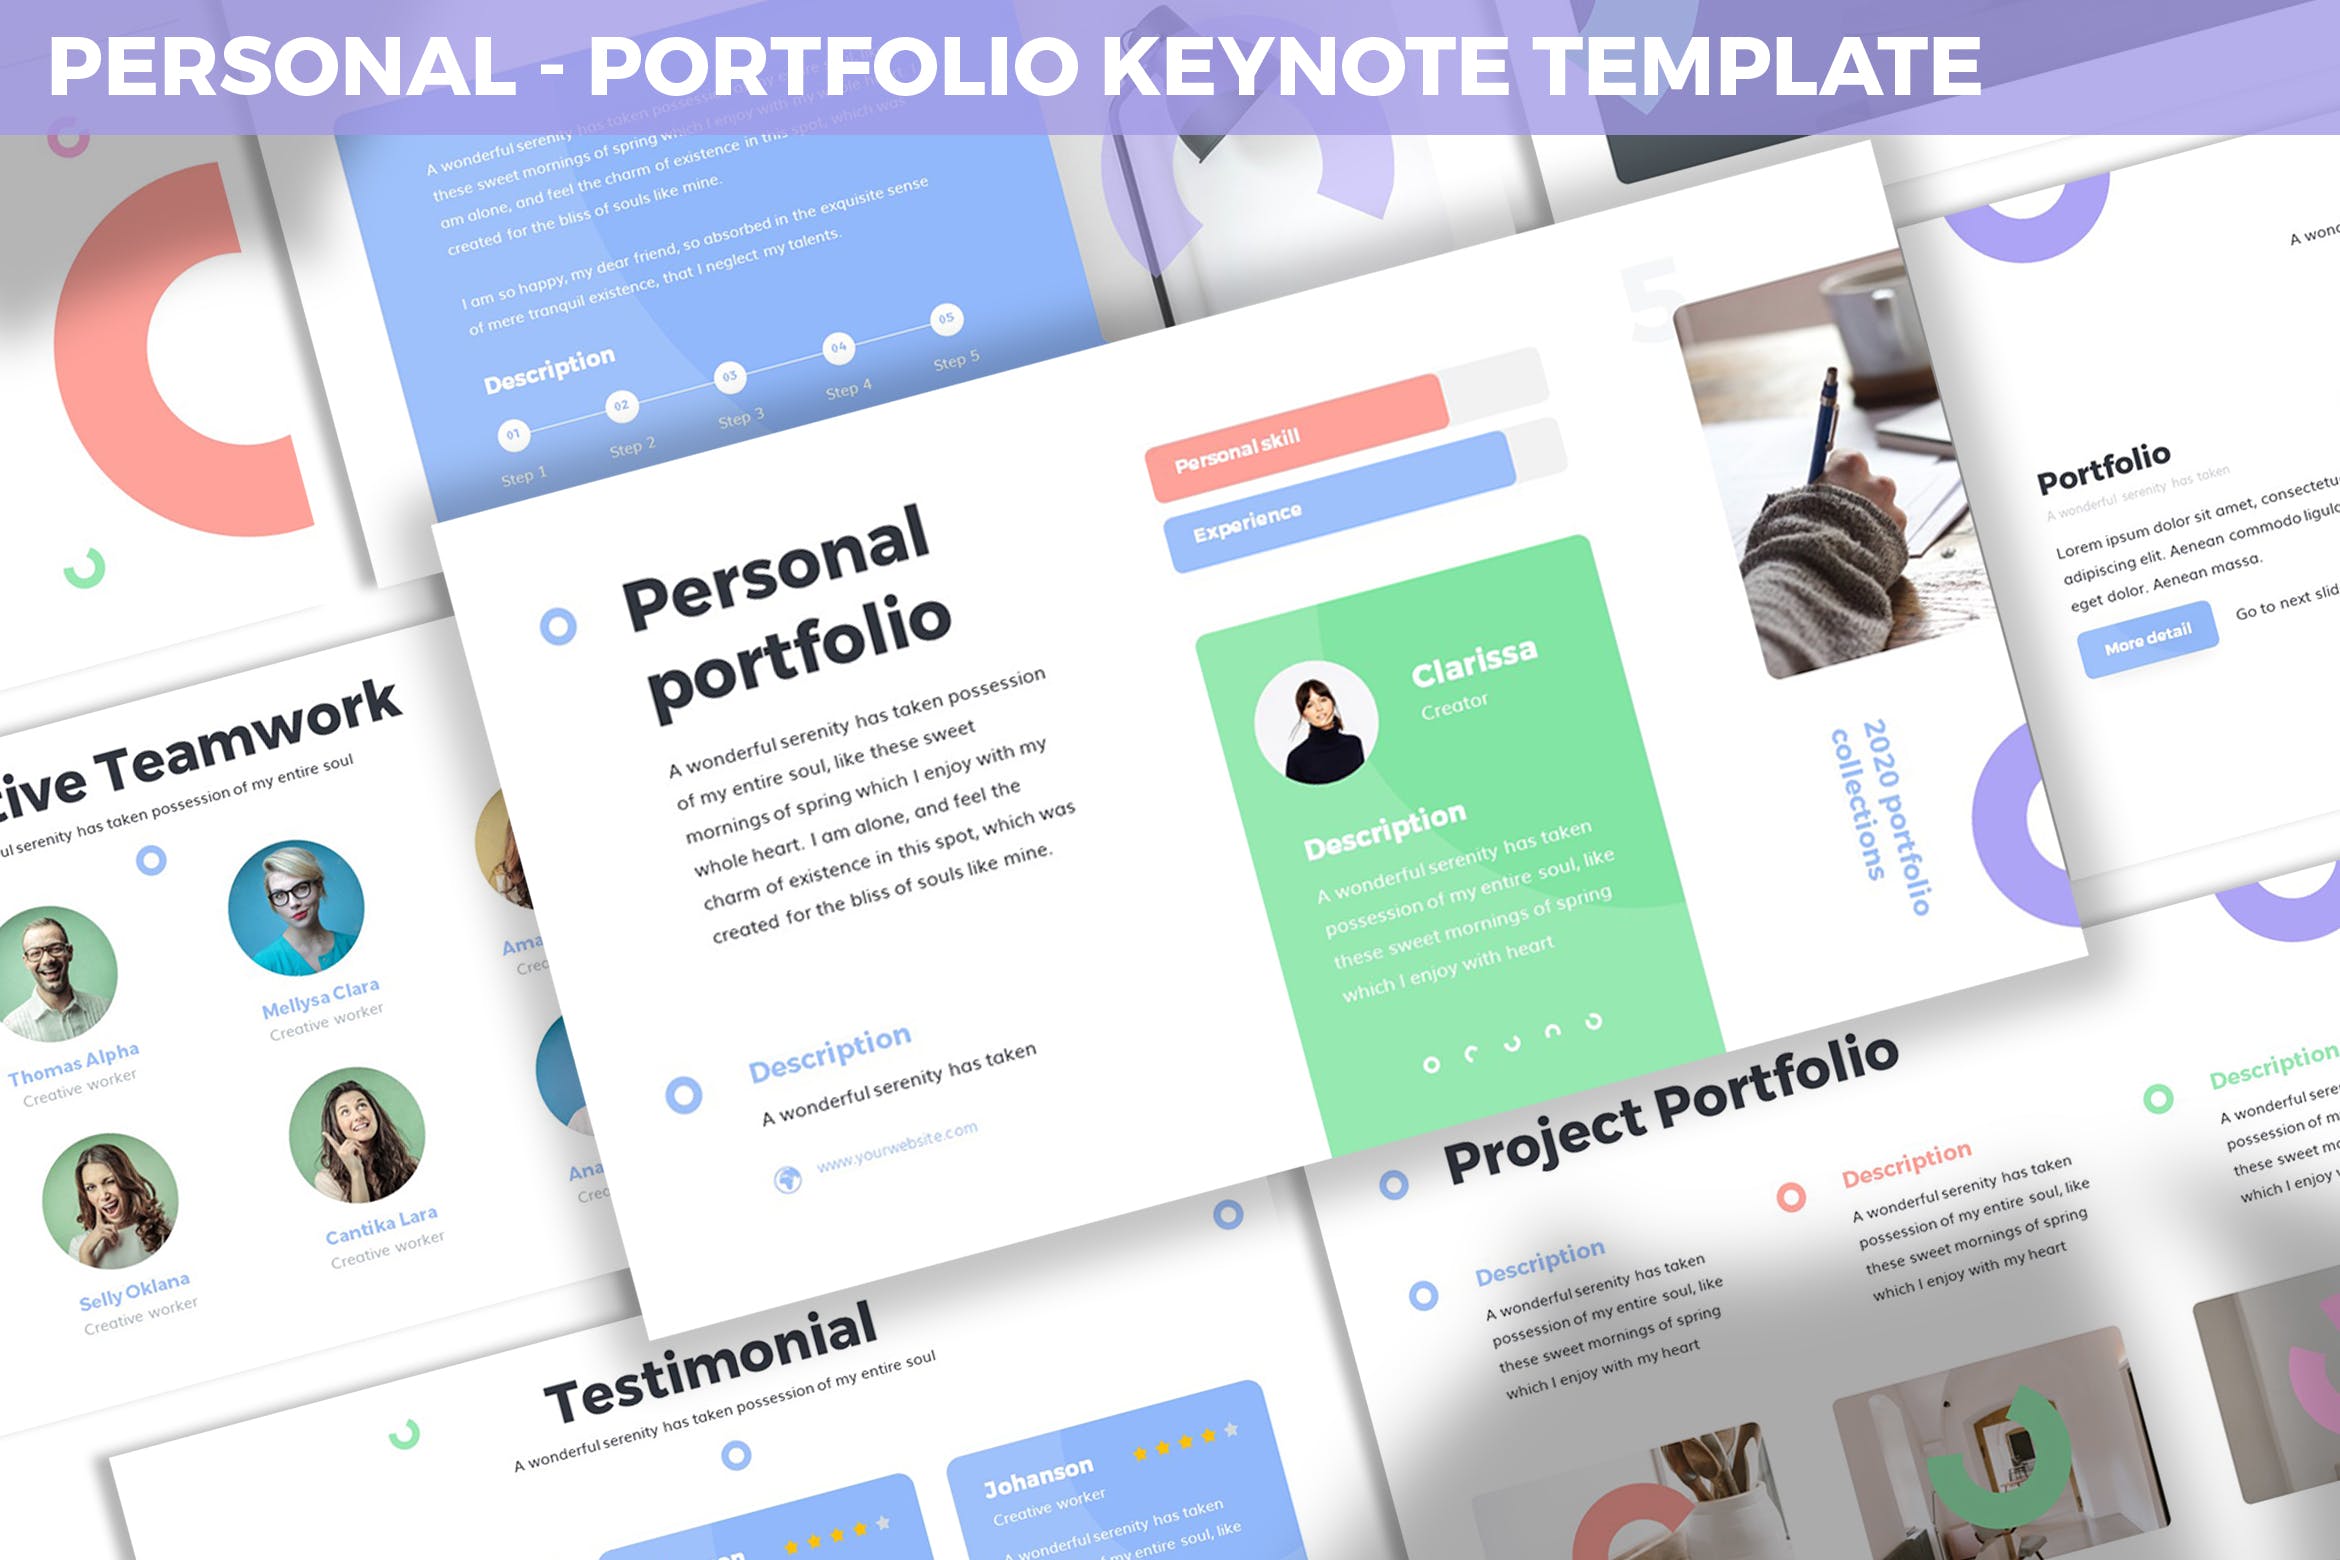 项目融资方案报告素材天下精选Keynote模板模板 Personal – Portfolio Keynote Template插图